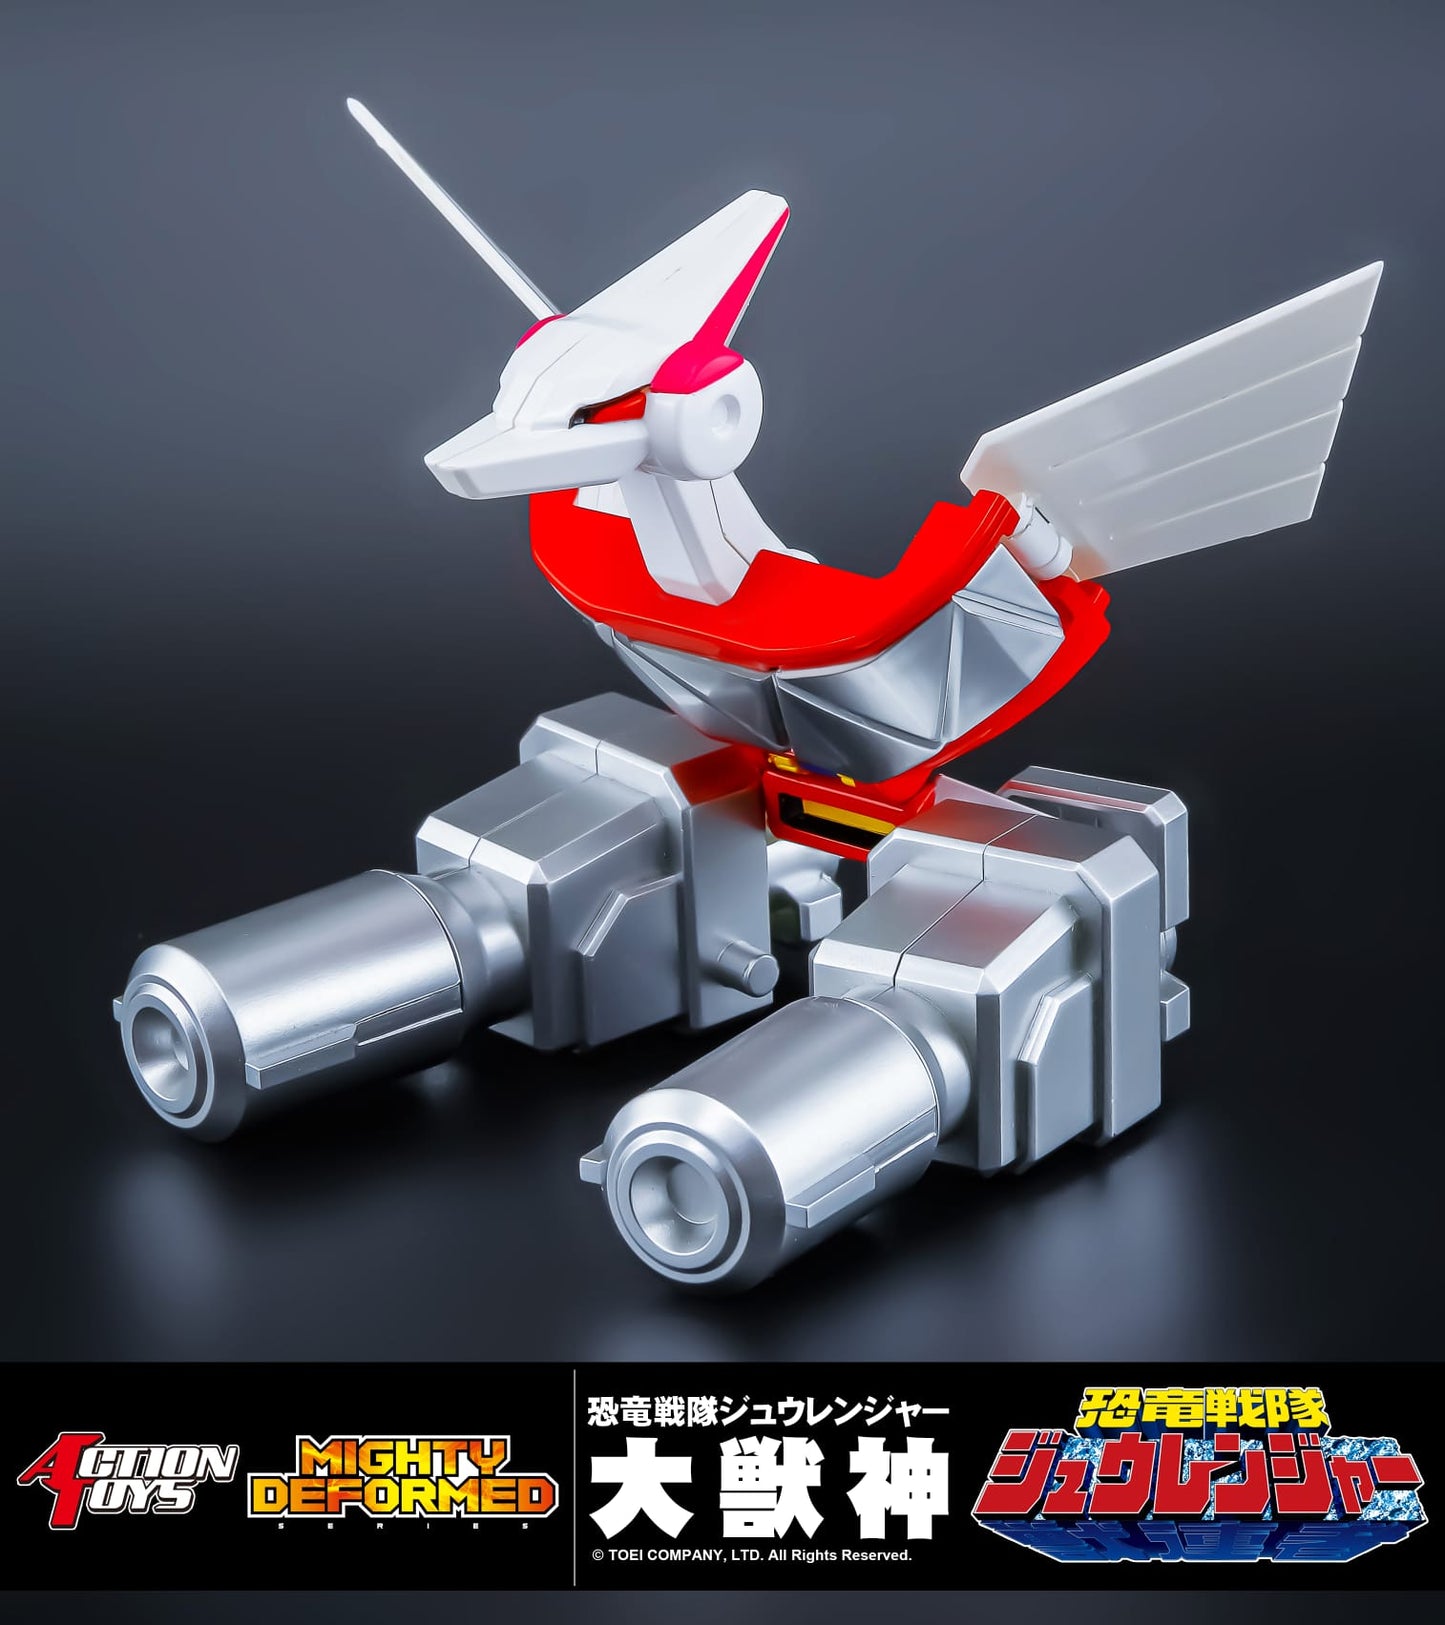 ES Gokin ES合金 Action Toys Mighty Deformed Mighty Morphin Power Rangers Megazord